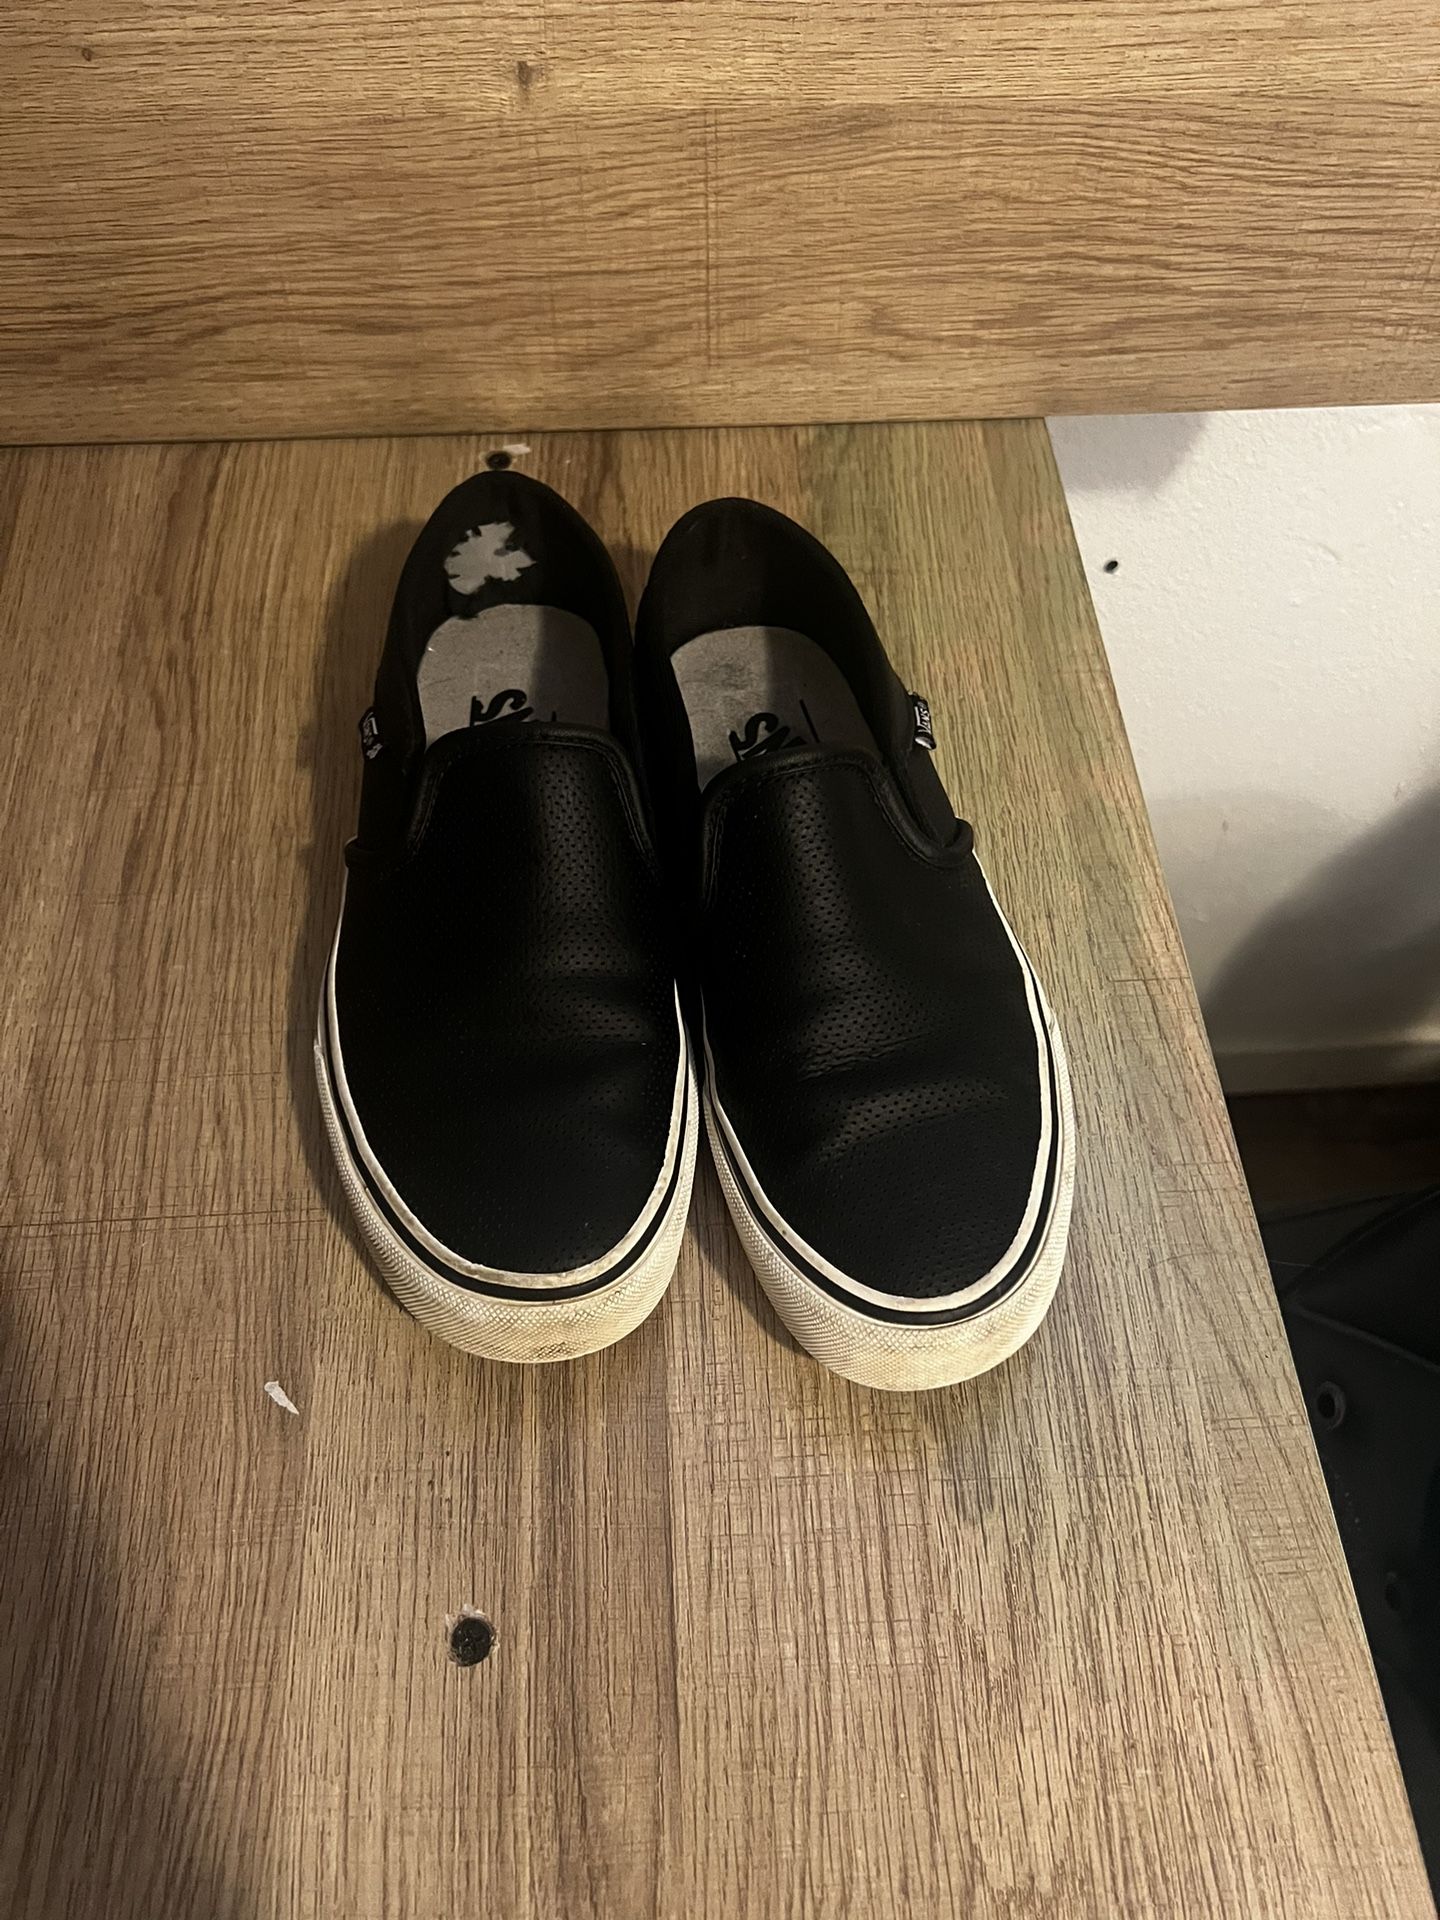 VANS Slip-On Perf Leather Shoe Black SIZE 7